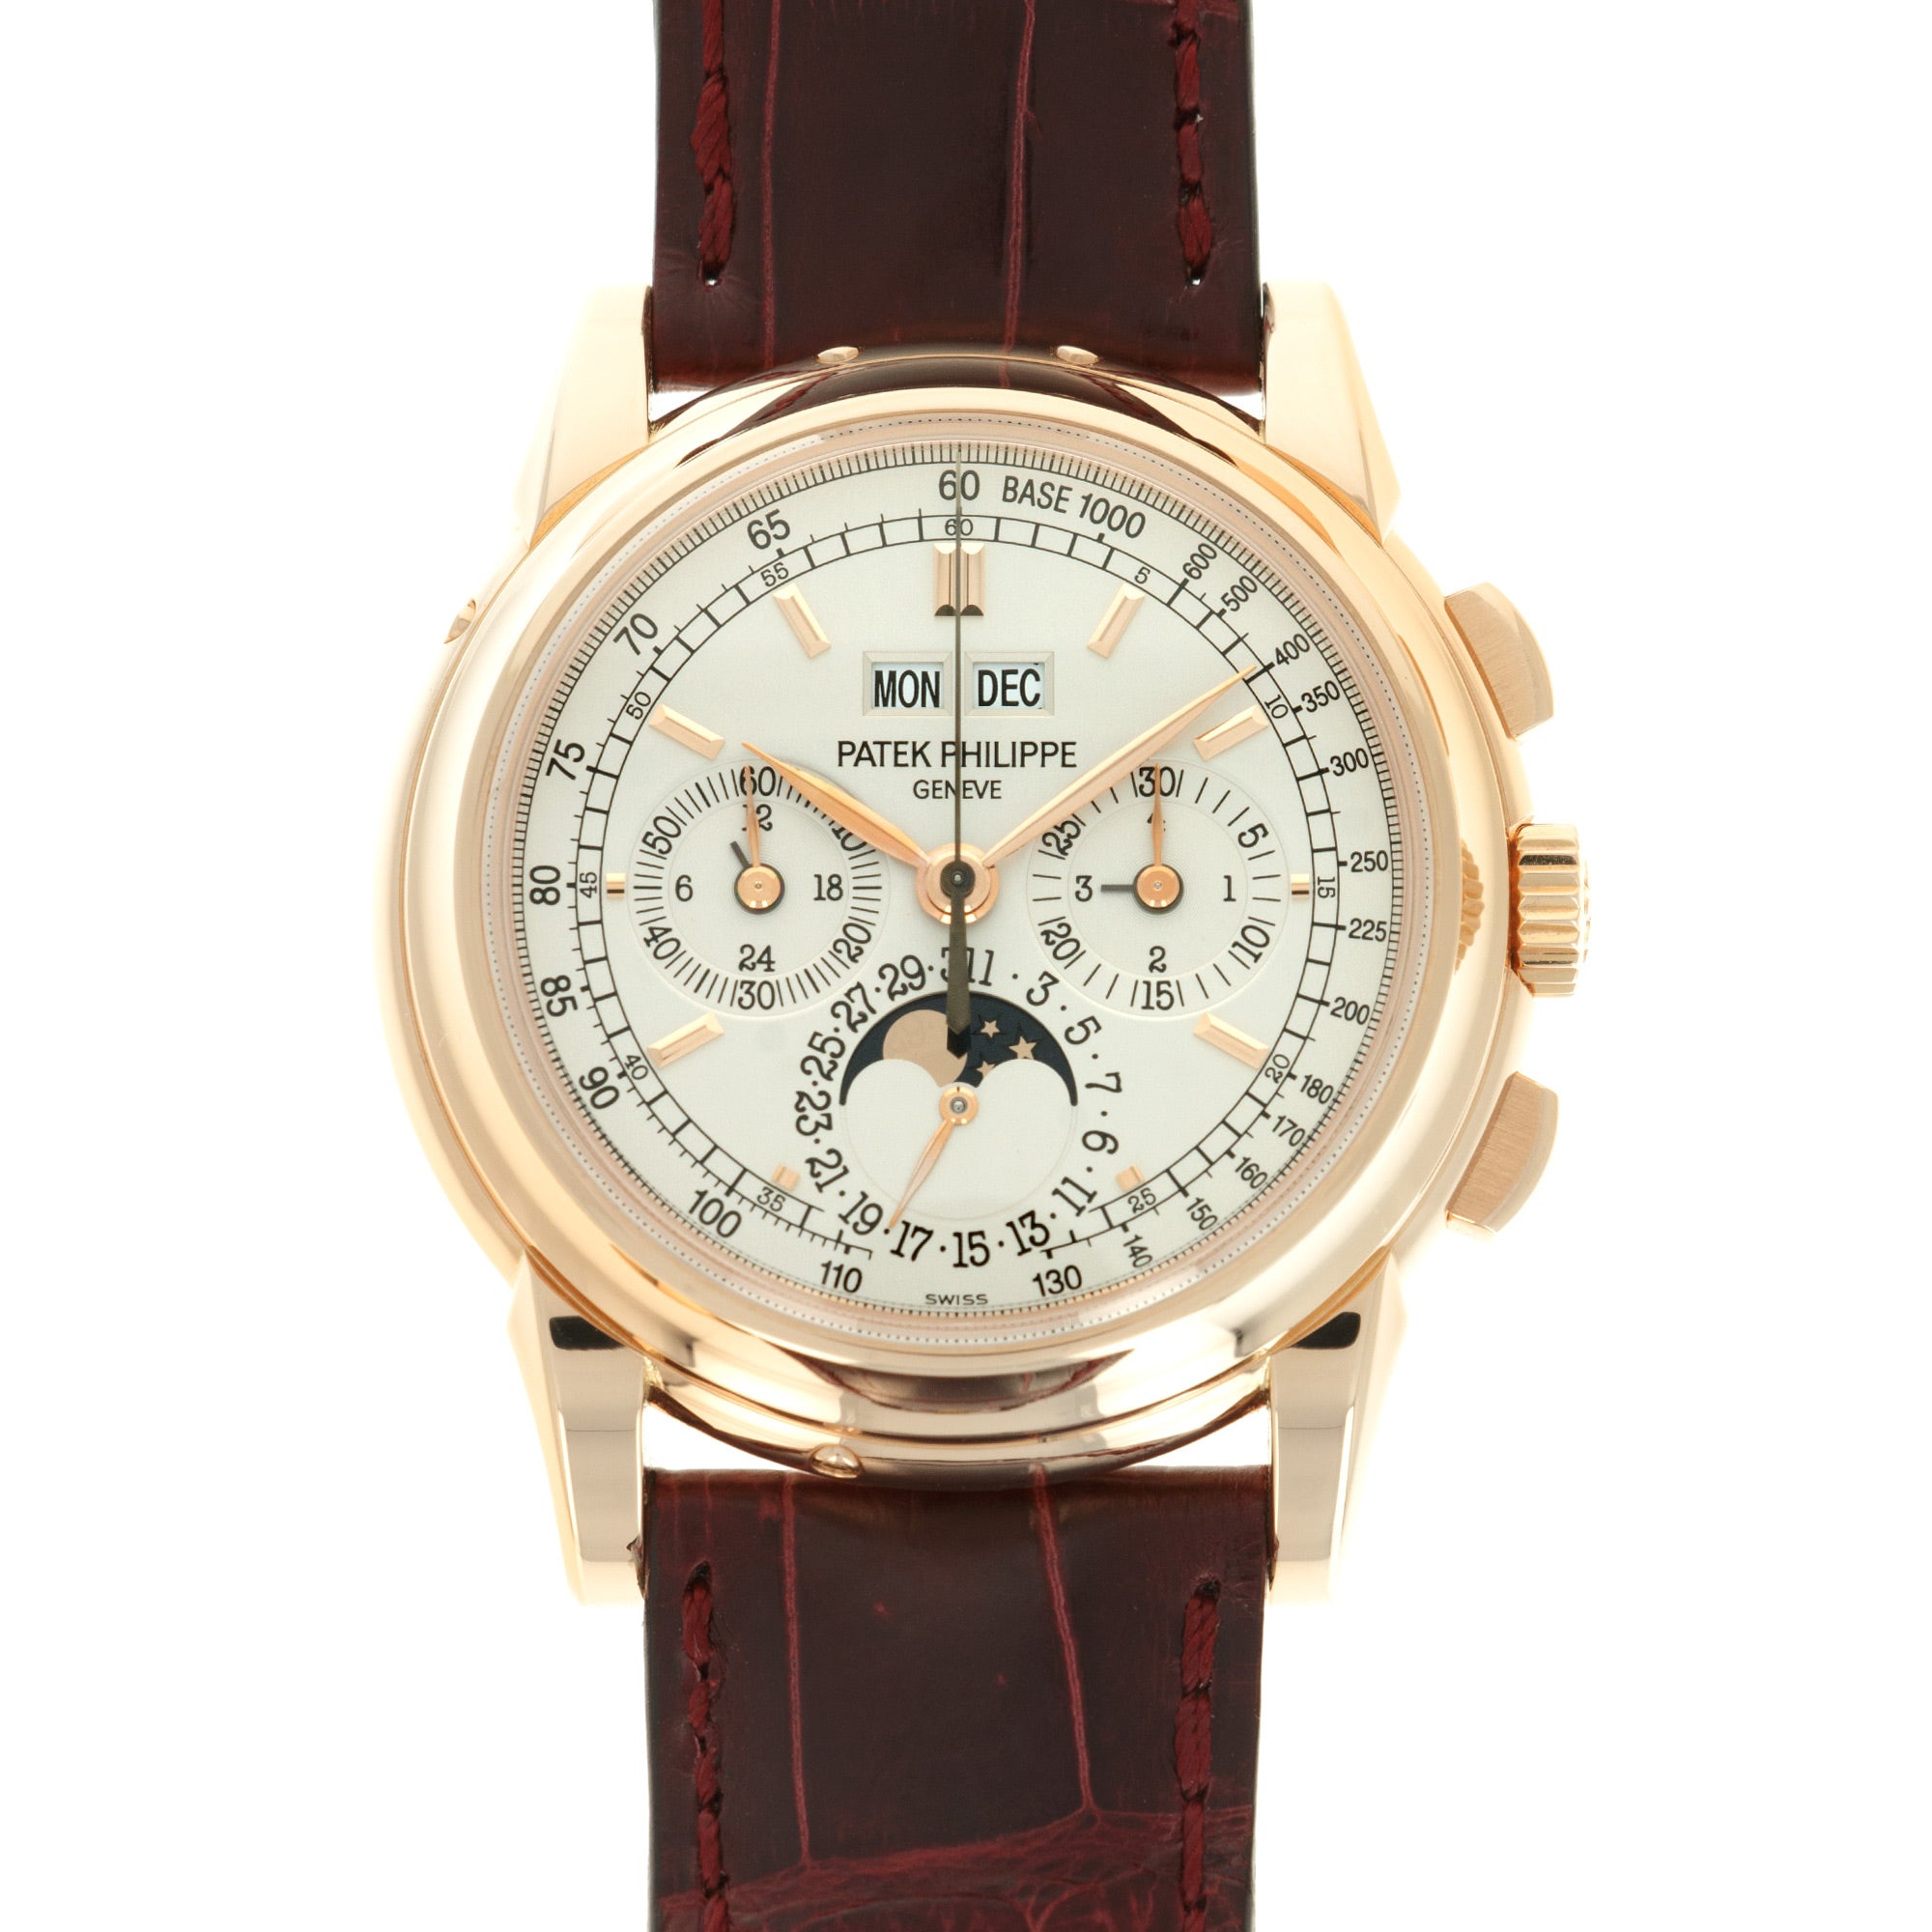 Patek Philippe - Patek Philippe Rose Gold Perpetual Calendar Chronograph Watch Ref. 5970 - The Keystone Watches